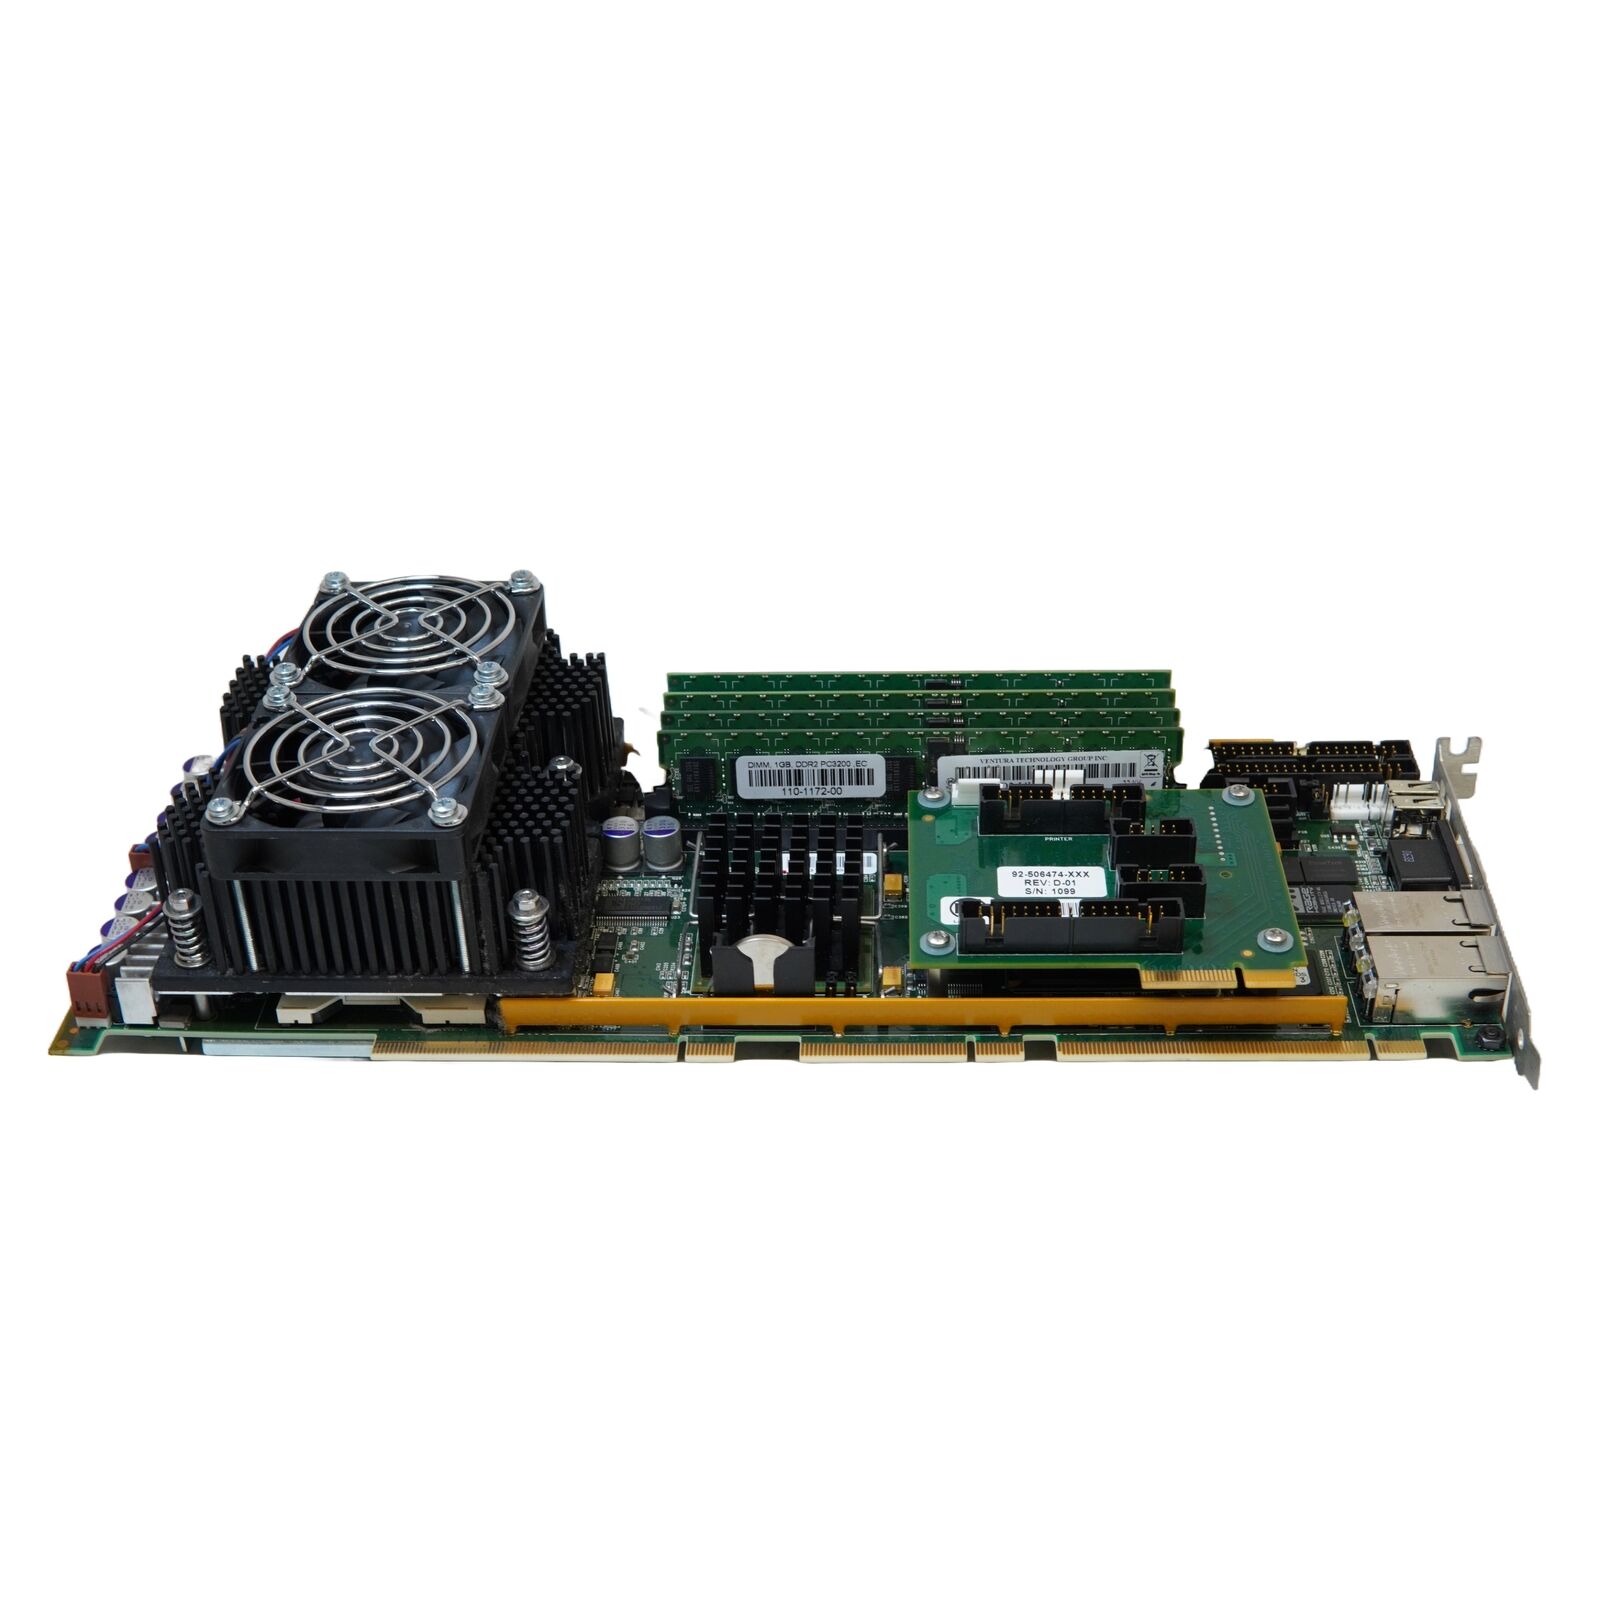 Trenton 92-506313-XXX W/ 2x Intel Xeon Processors & 4GB DDR2 RAM